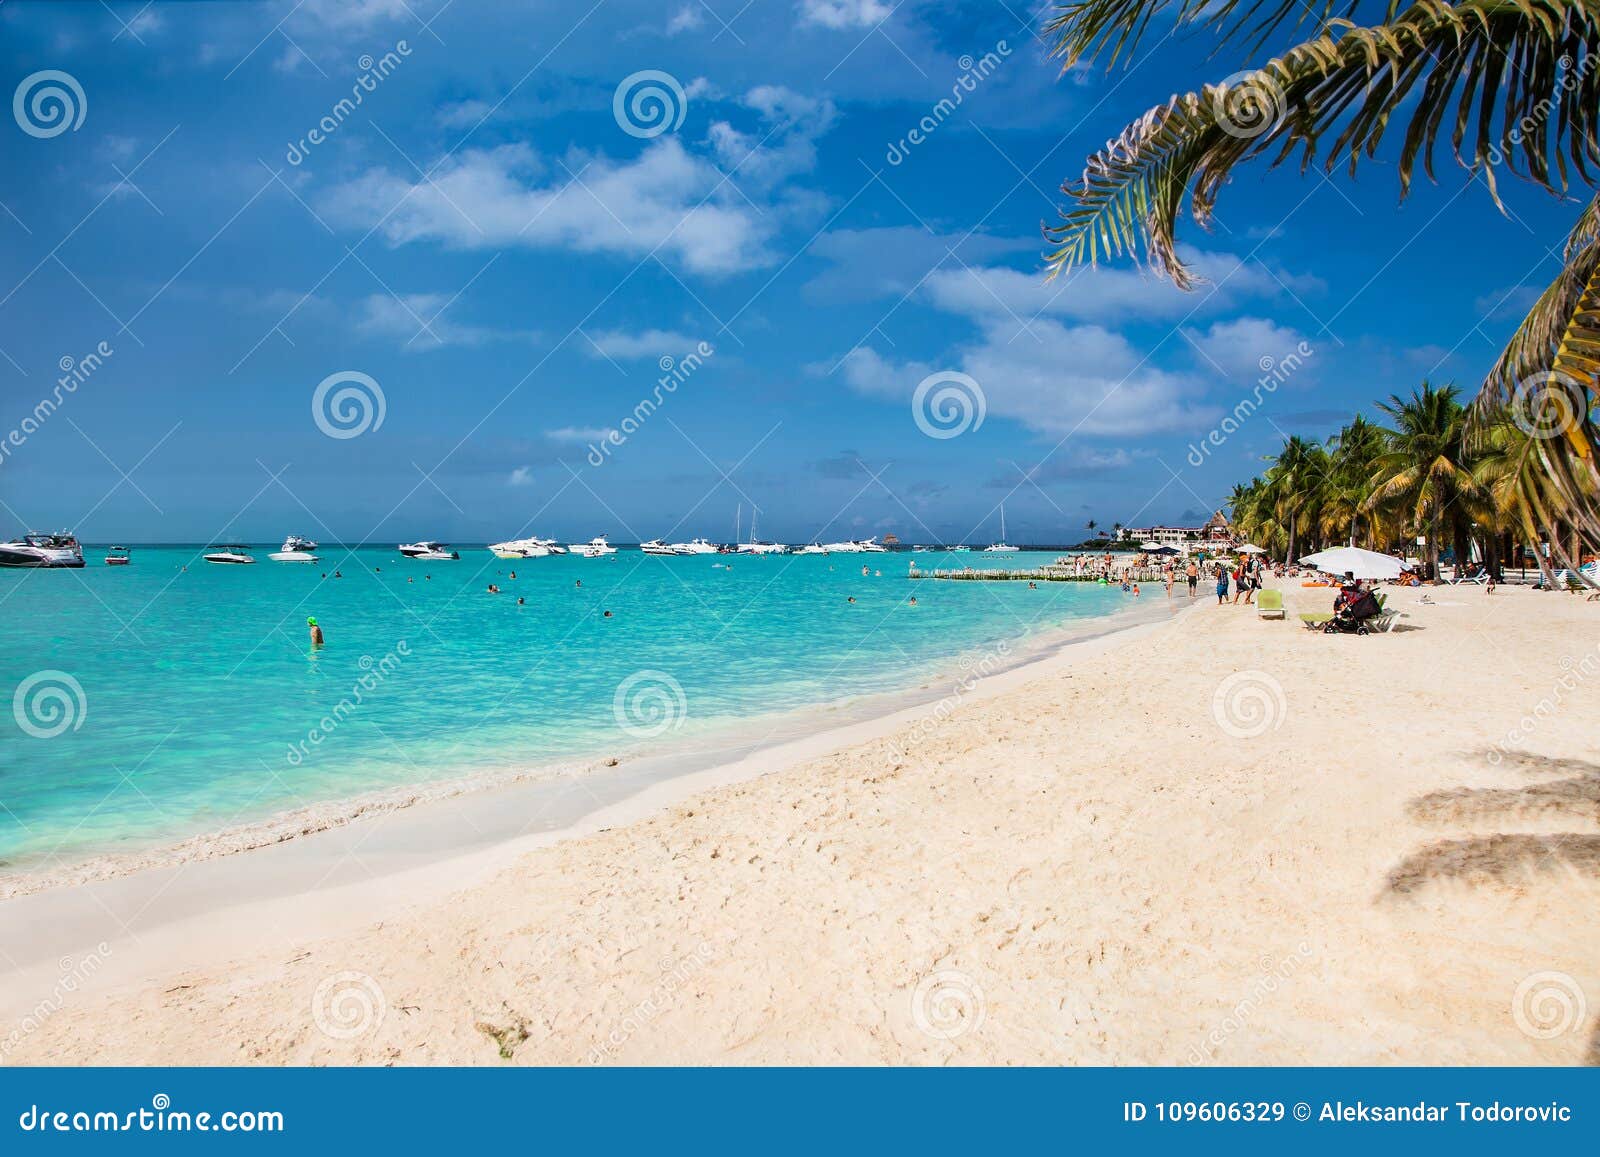 norten beach on isla mujeres island near cancun in mexico.